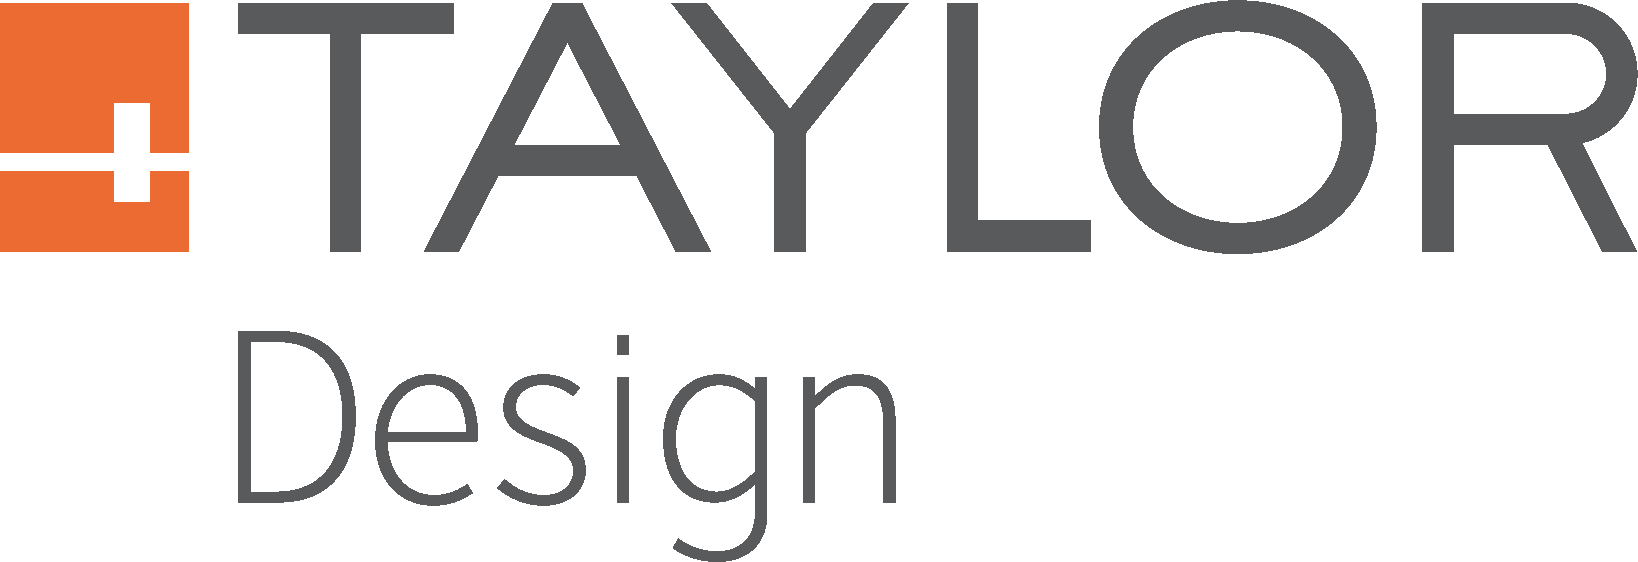 The Taylor Logo - Taylor Design, Interior Design, Design Strategy